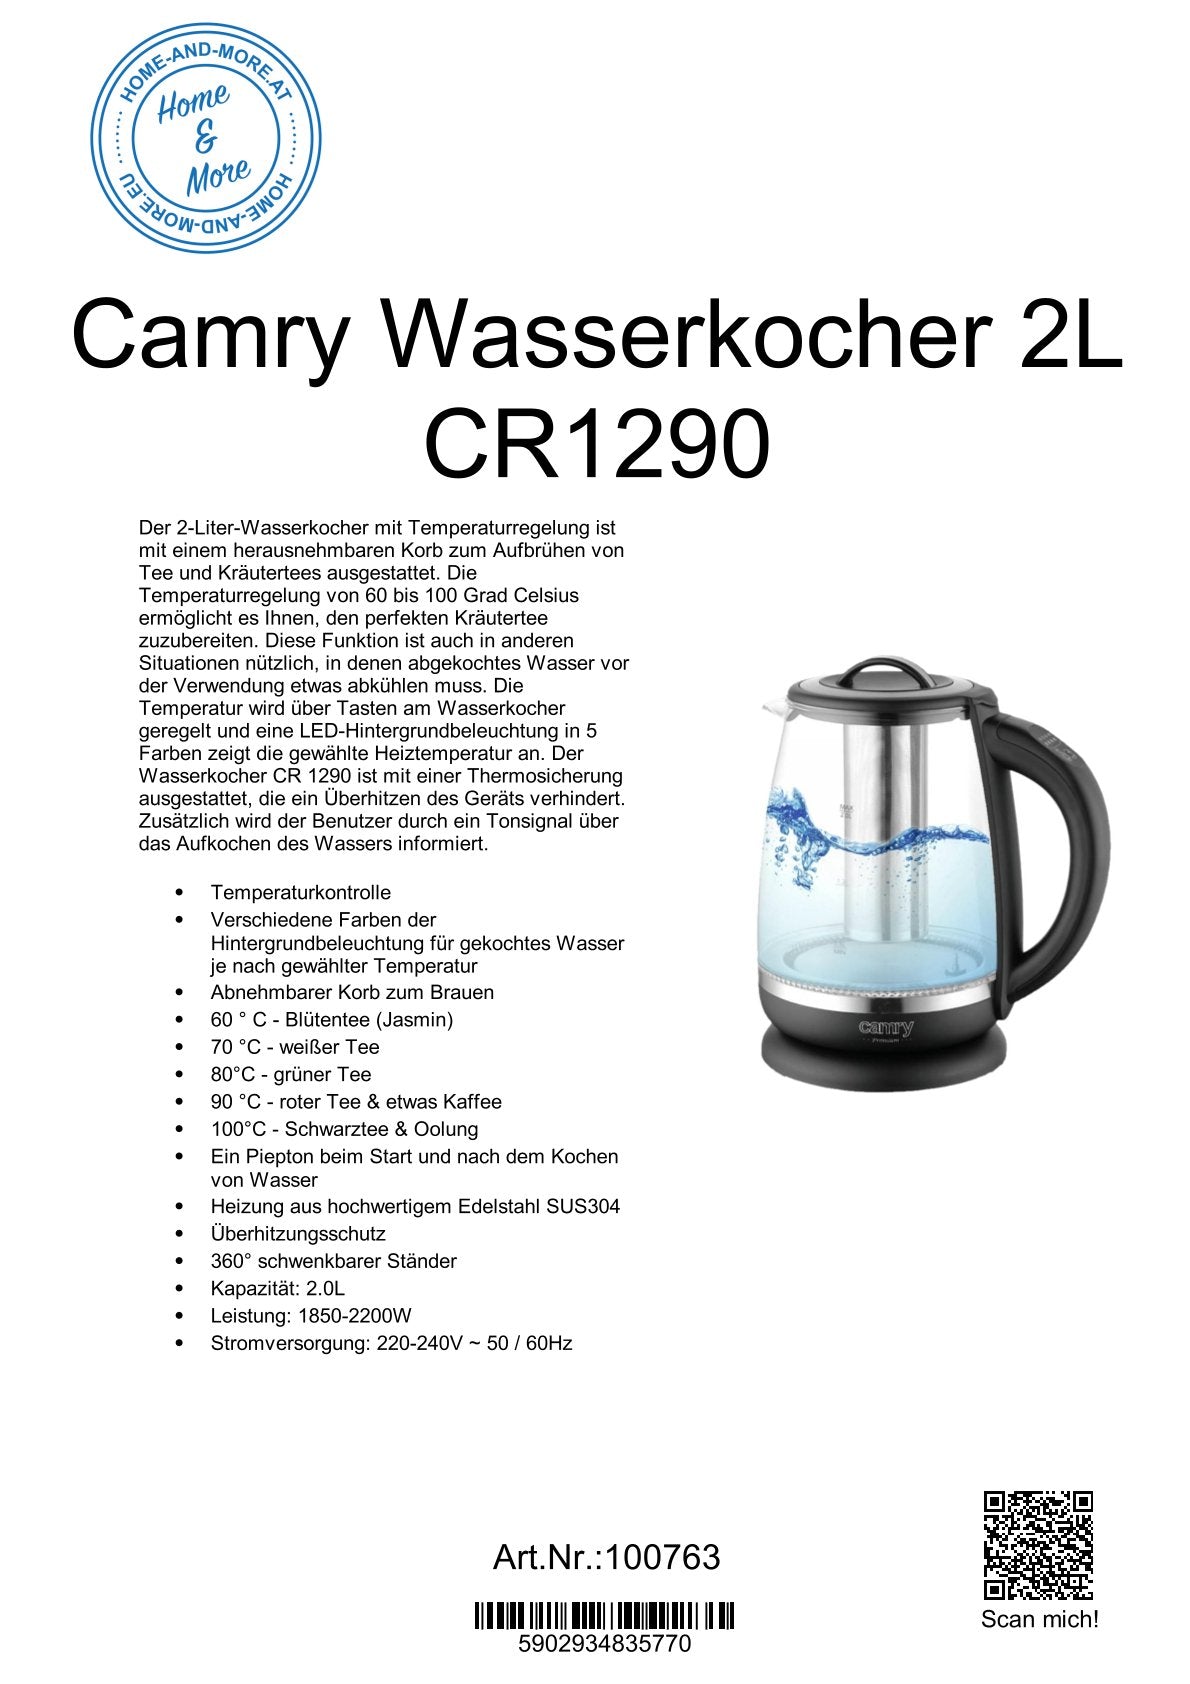 Camry Wasserkocher 2L CR1290